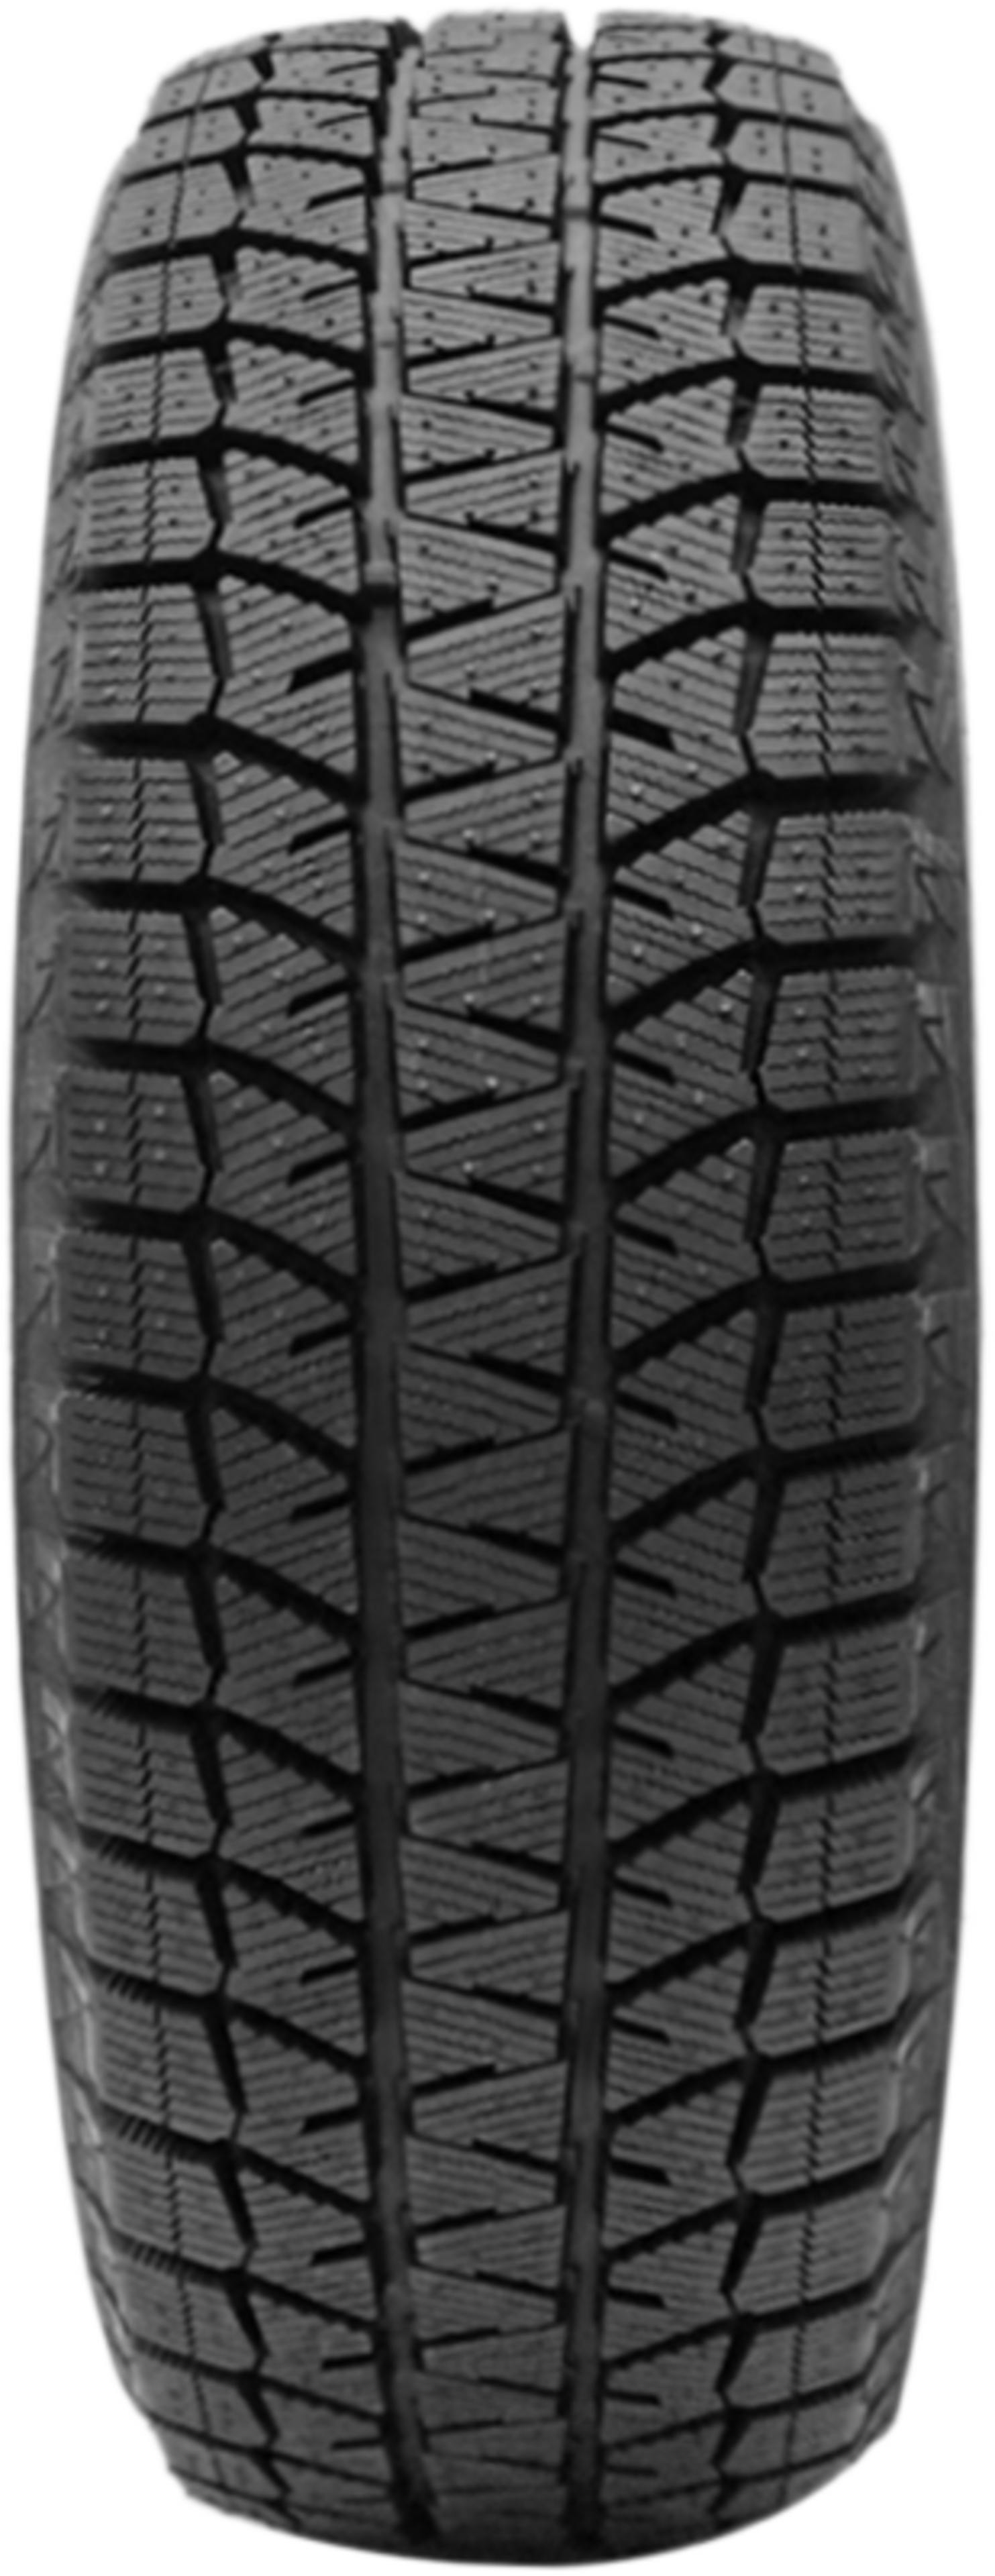 LM001 SimpleTire Tires Blizzak Online Bridgestone Buy |